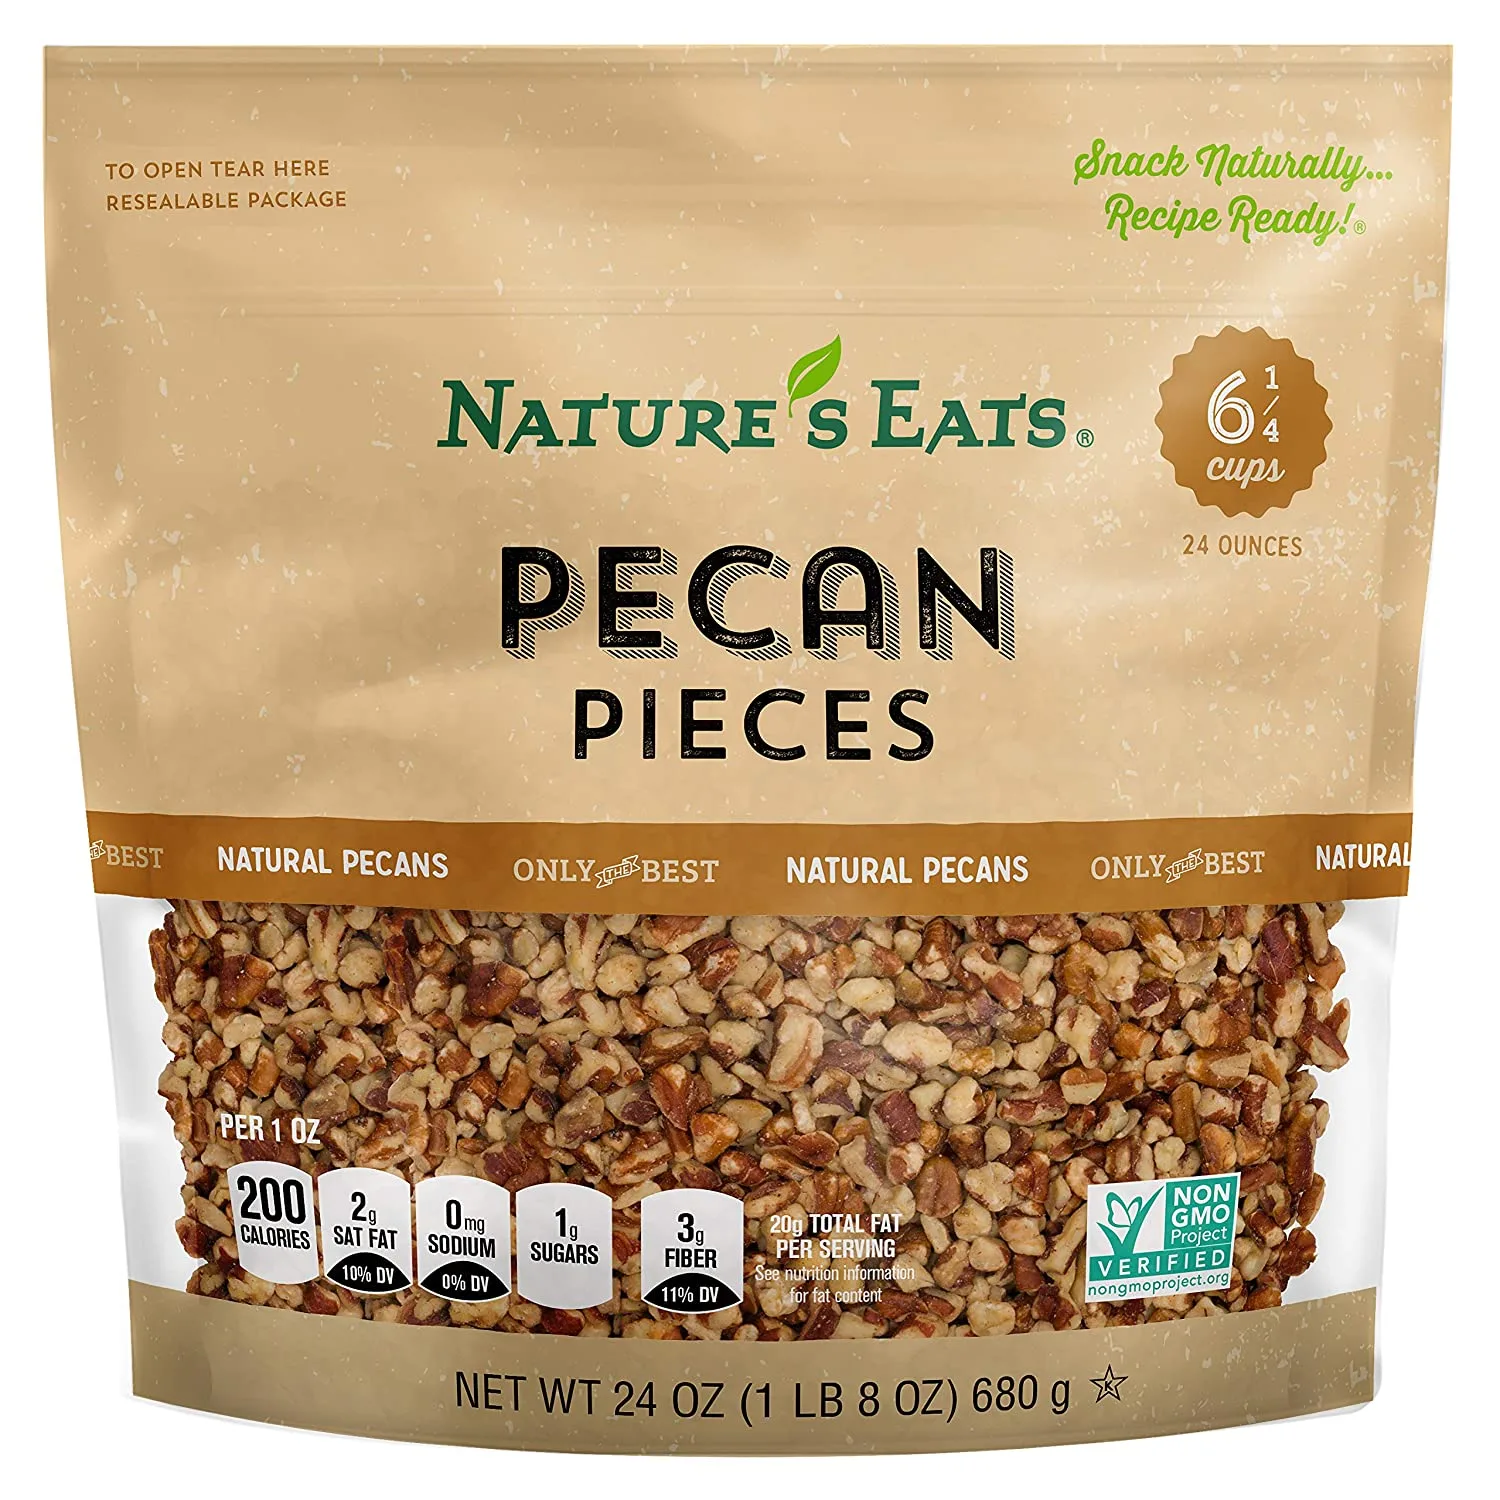 Nature's Eats Pecan Pieces
